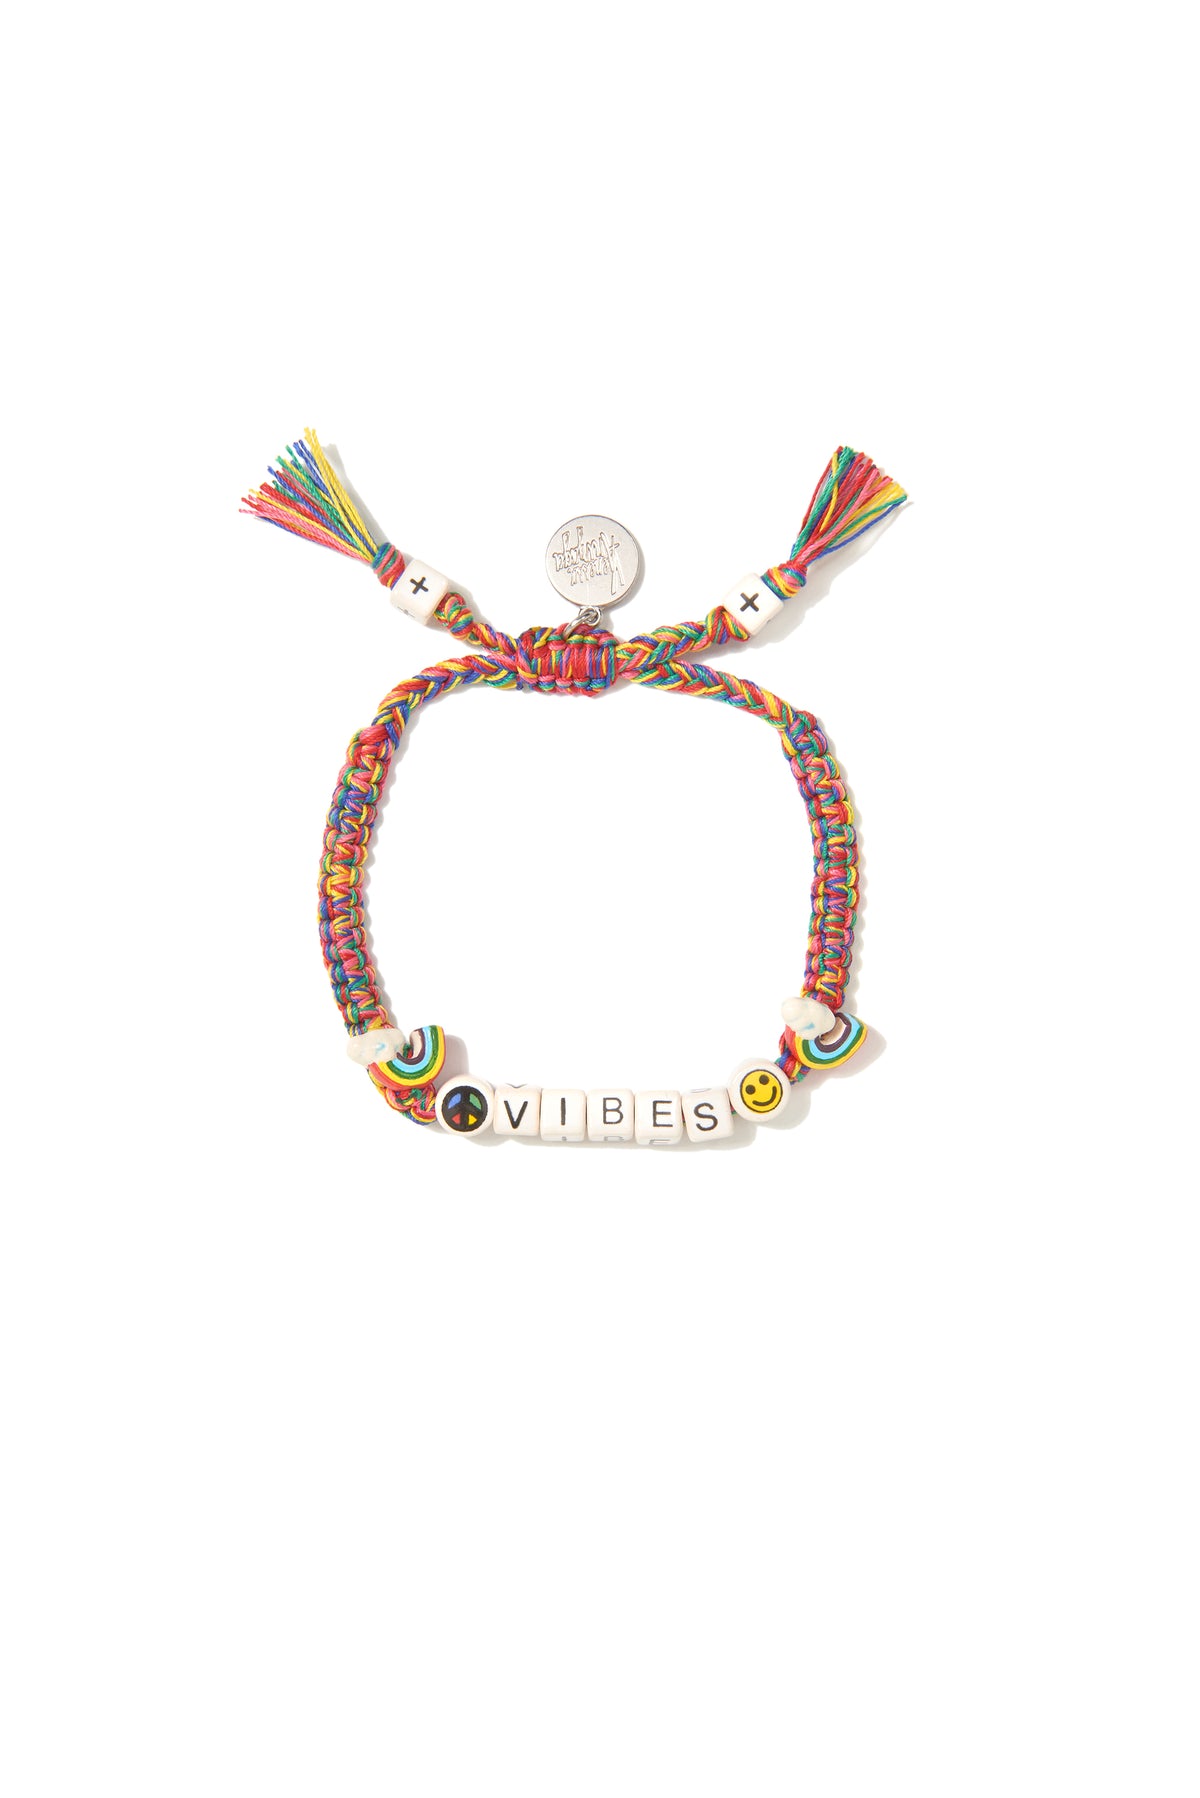 VA Vibes bracelet in rainbow melange